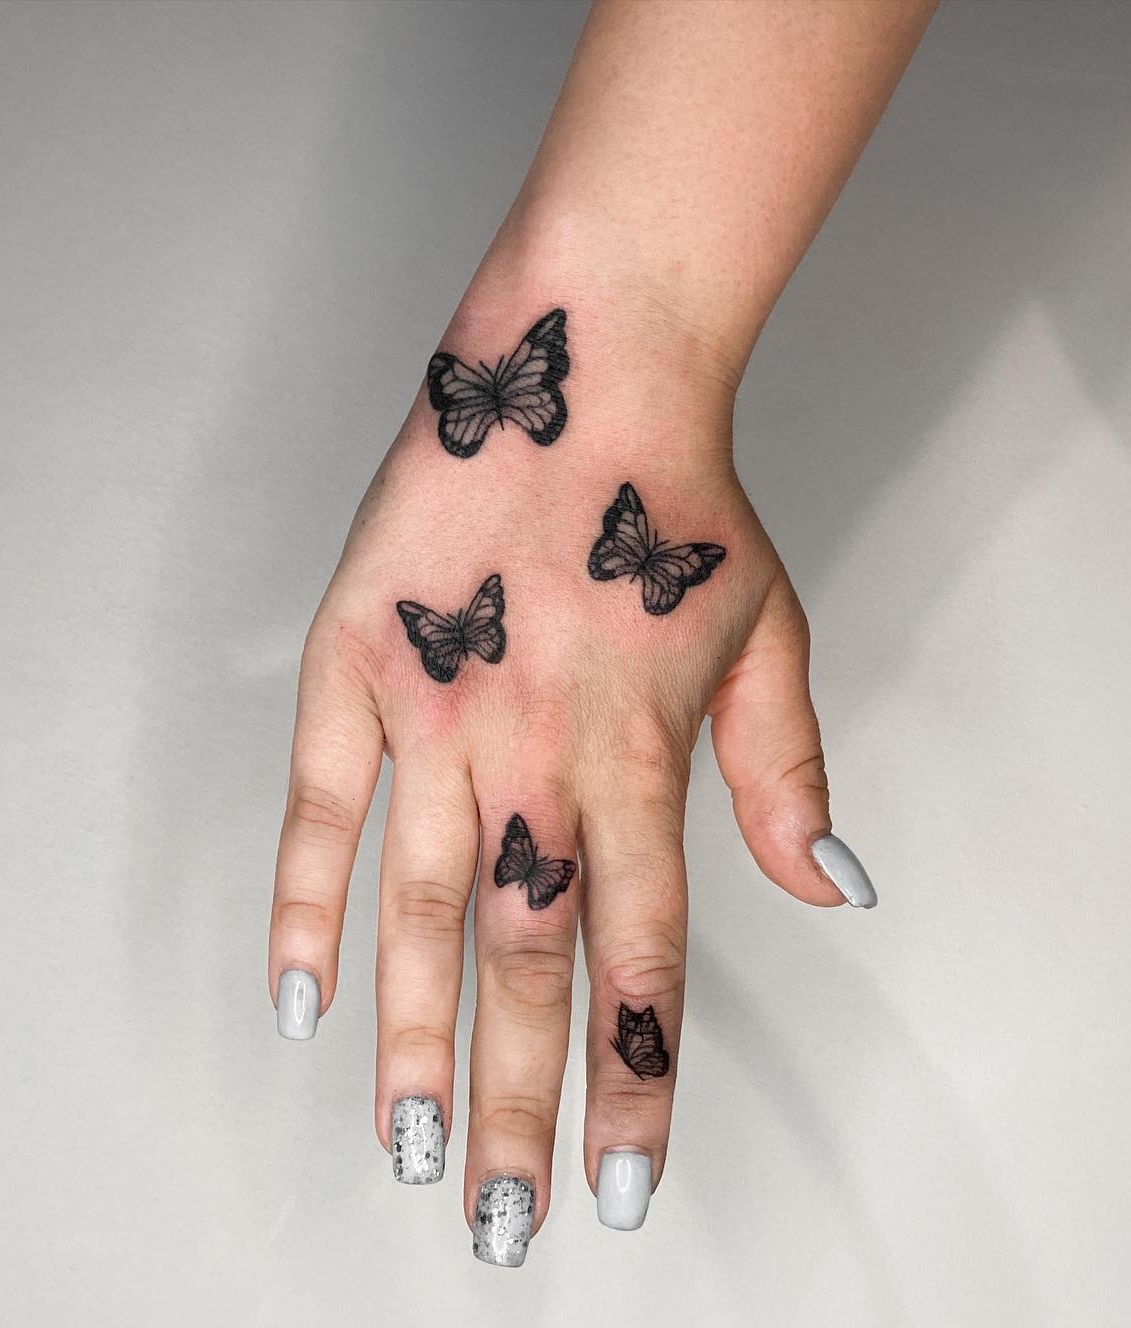 1 Sheet ladies Men's cute hand finger temporary black tattoos | eBay-cheohanoi.vn